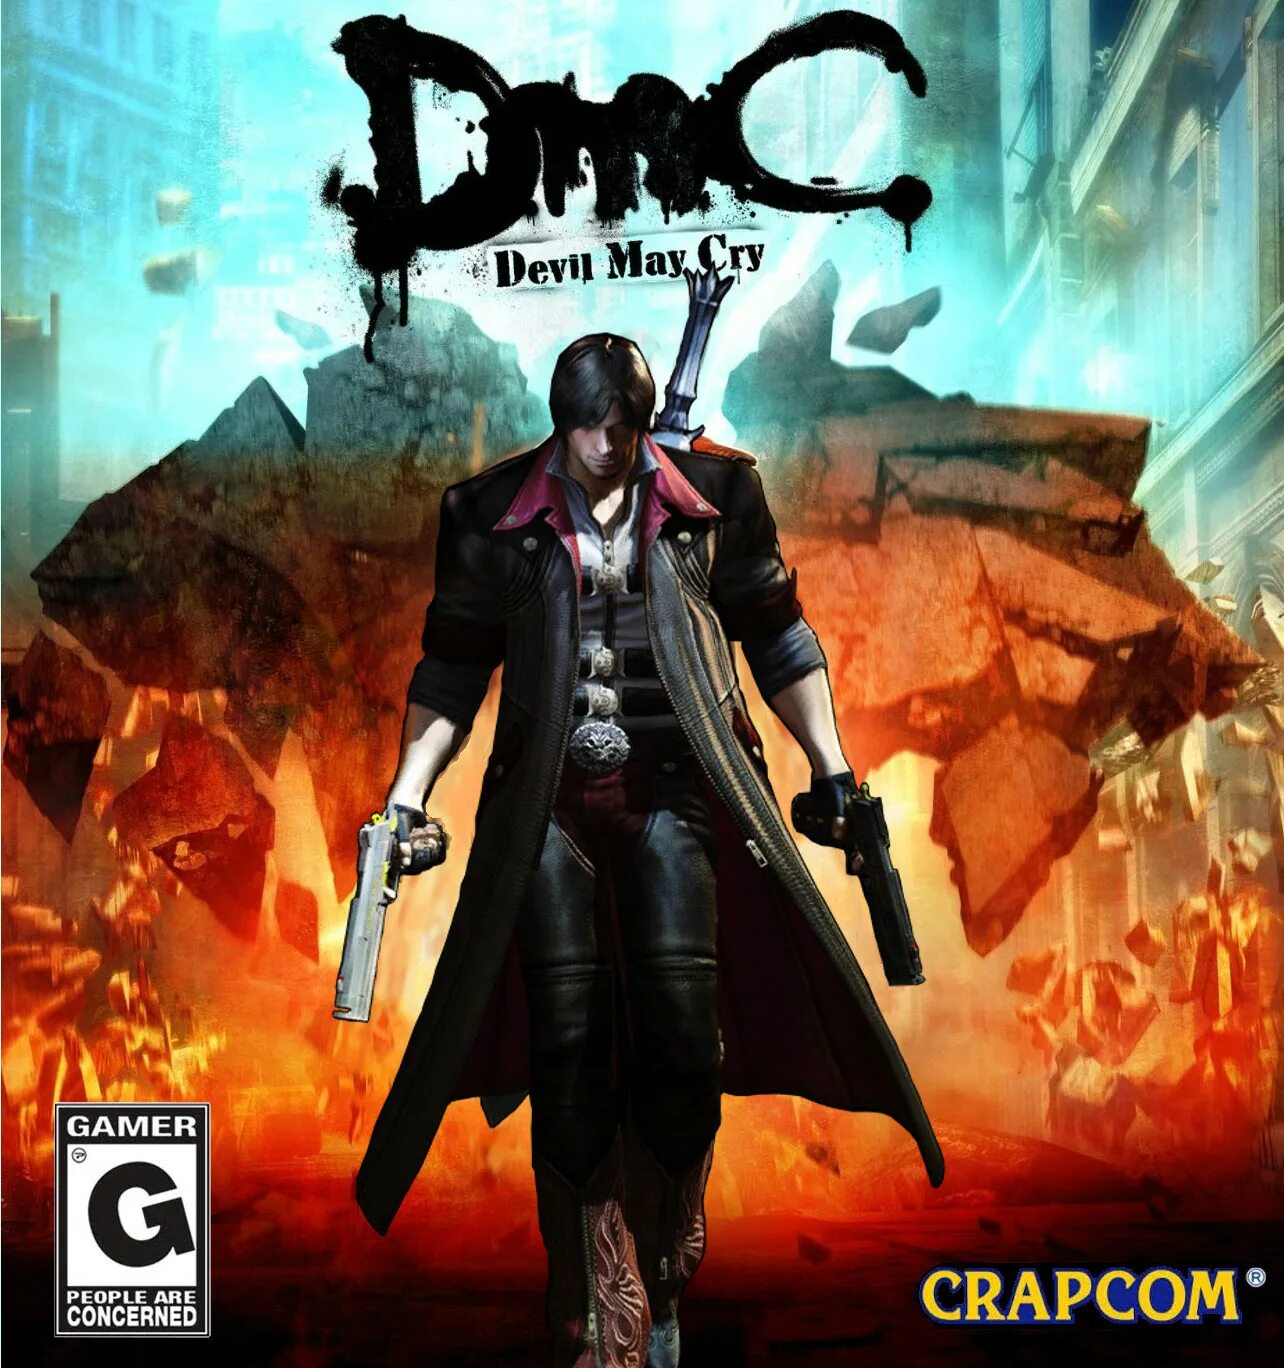 Dmc стим. DMC: Devil May Cry. Definitive Edition. Devil my Cry Definitive Edition. Devil May Cry DMC Definitive.